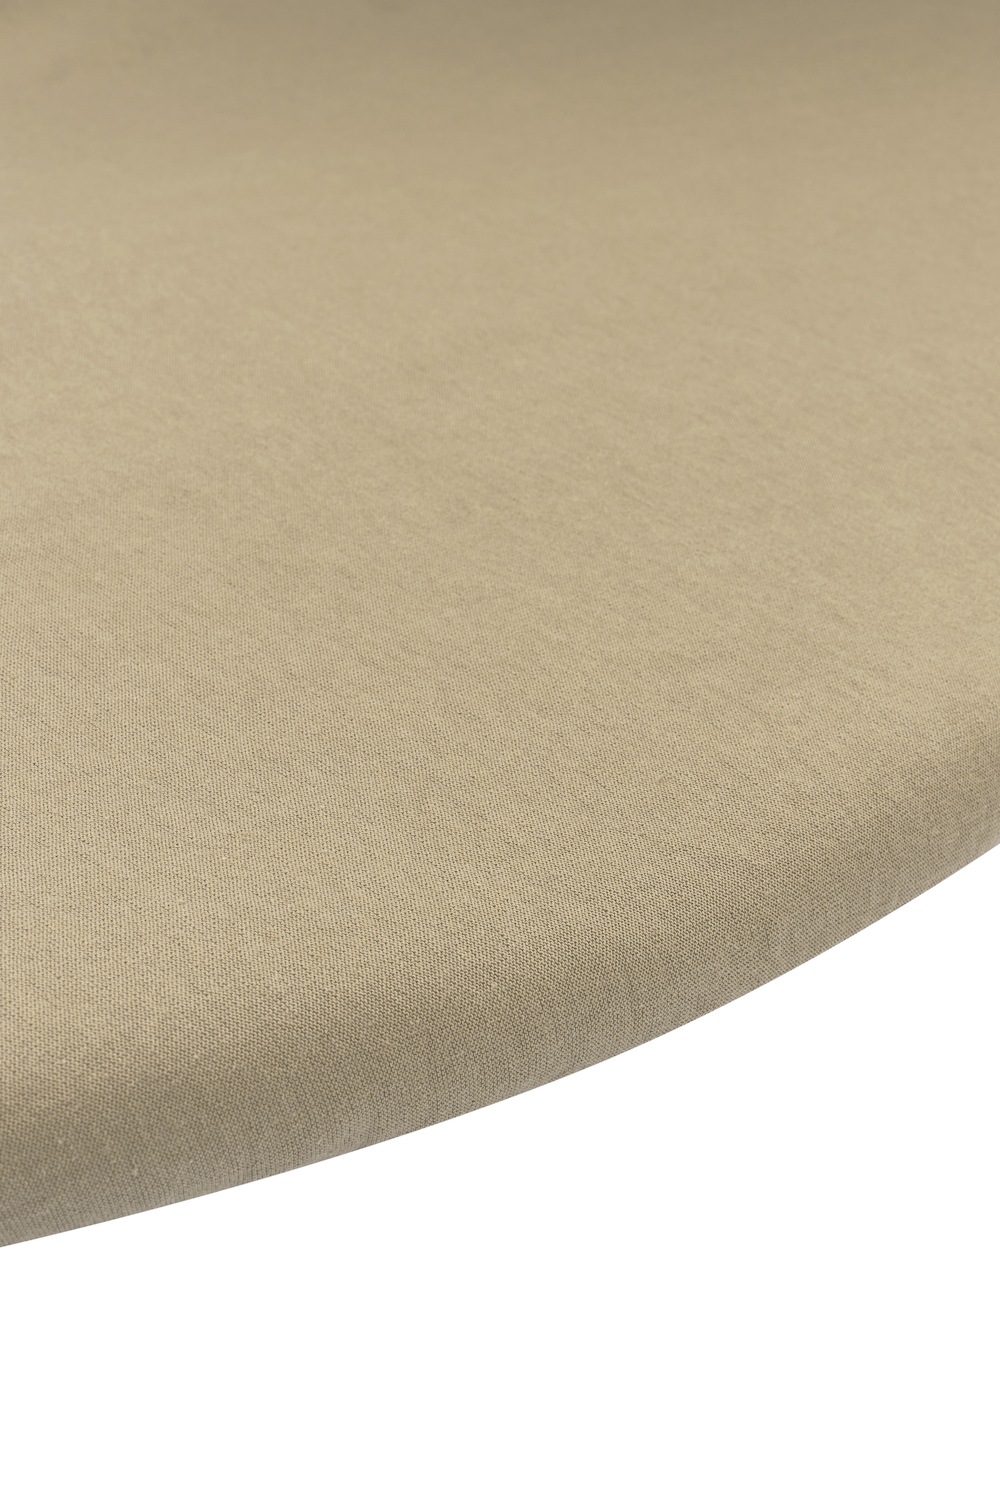 Fitted sheet playpen mattress Uni - taupe - Round 90/95cm